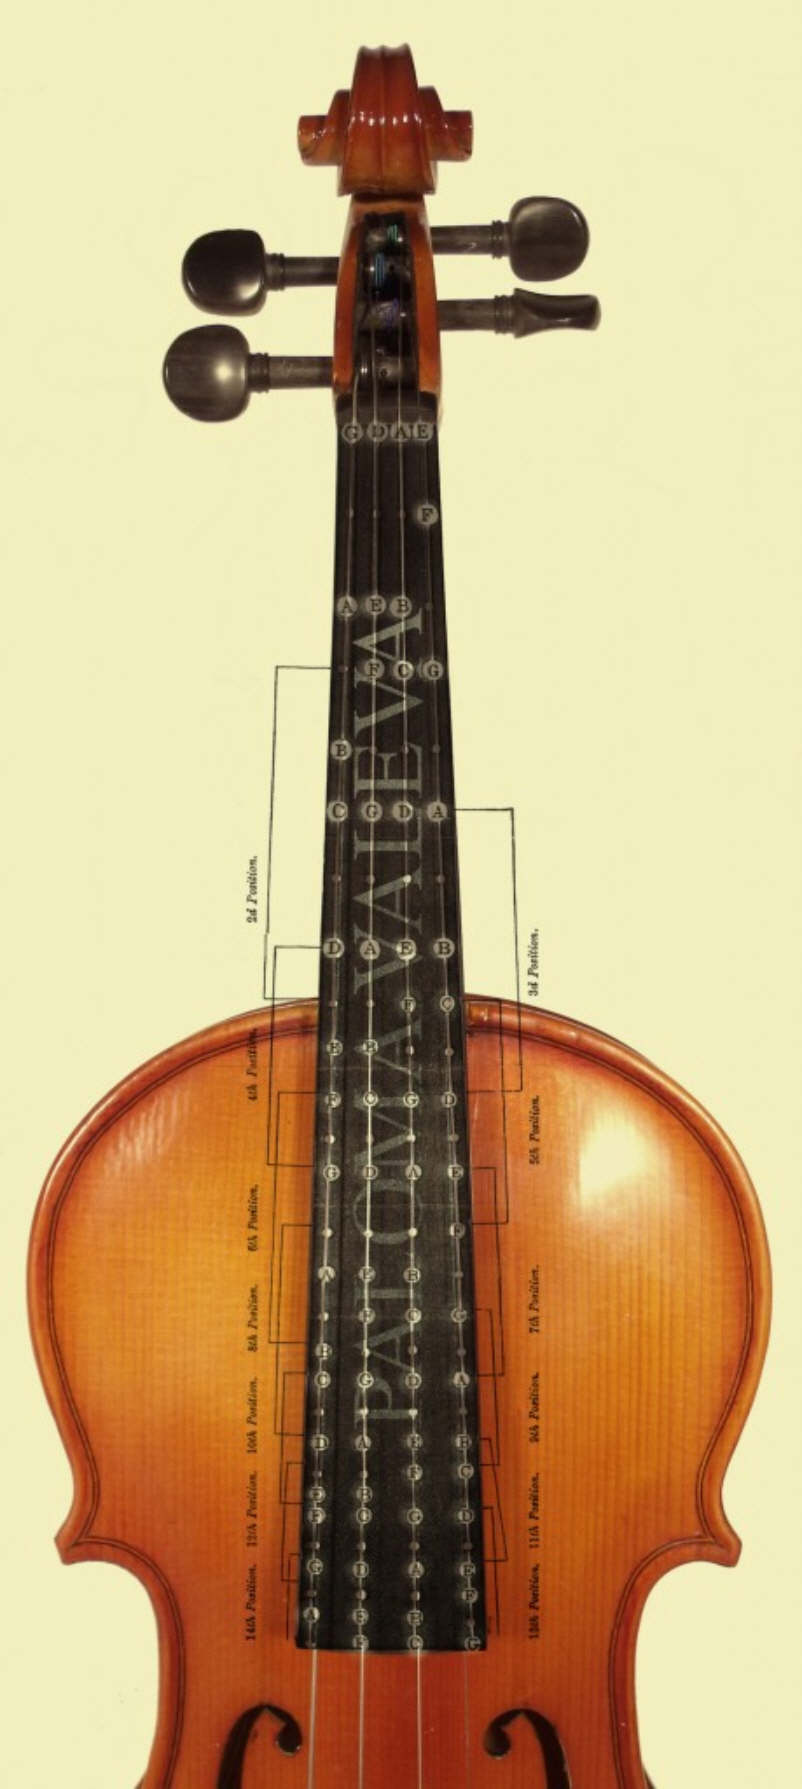 5th Position Violin Chart